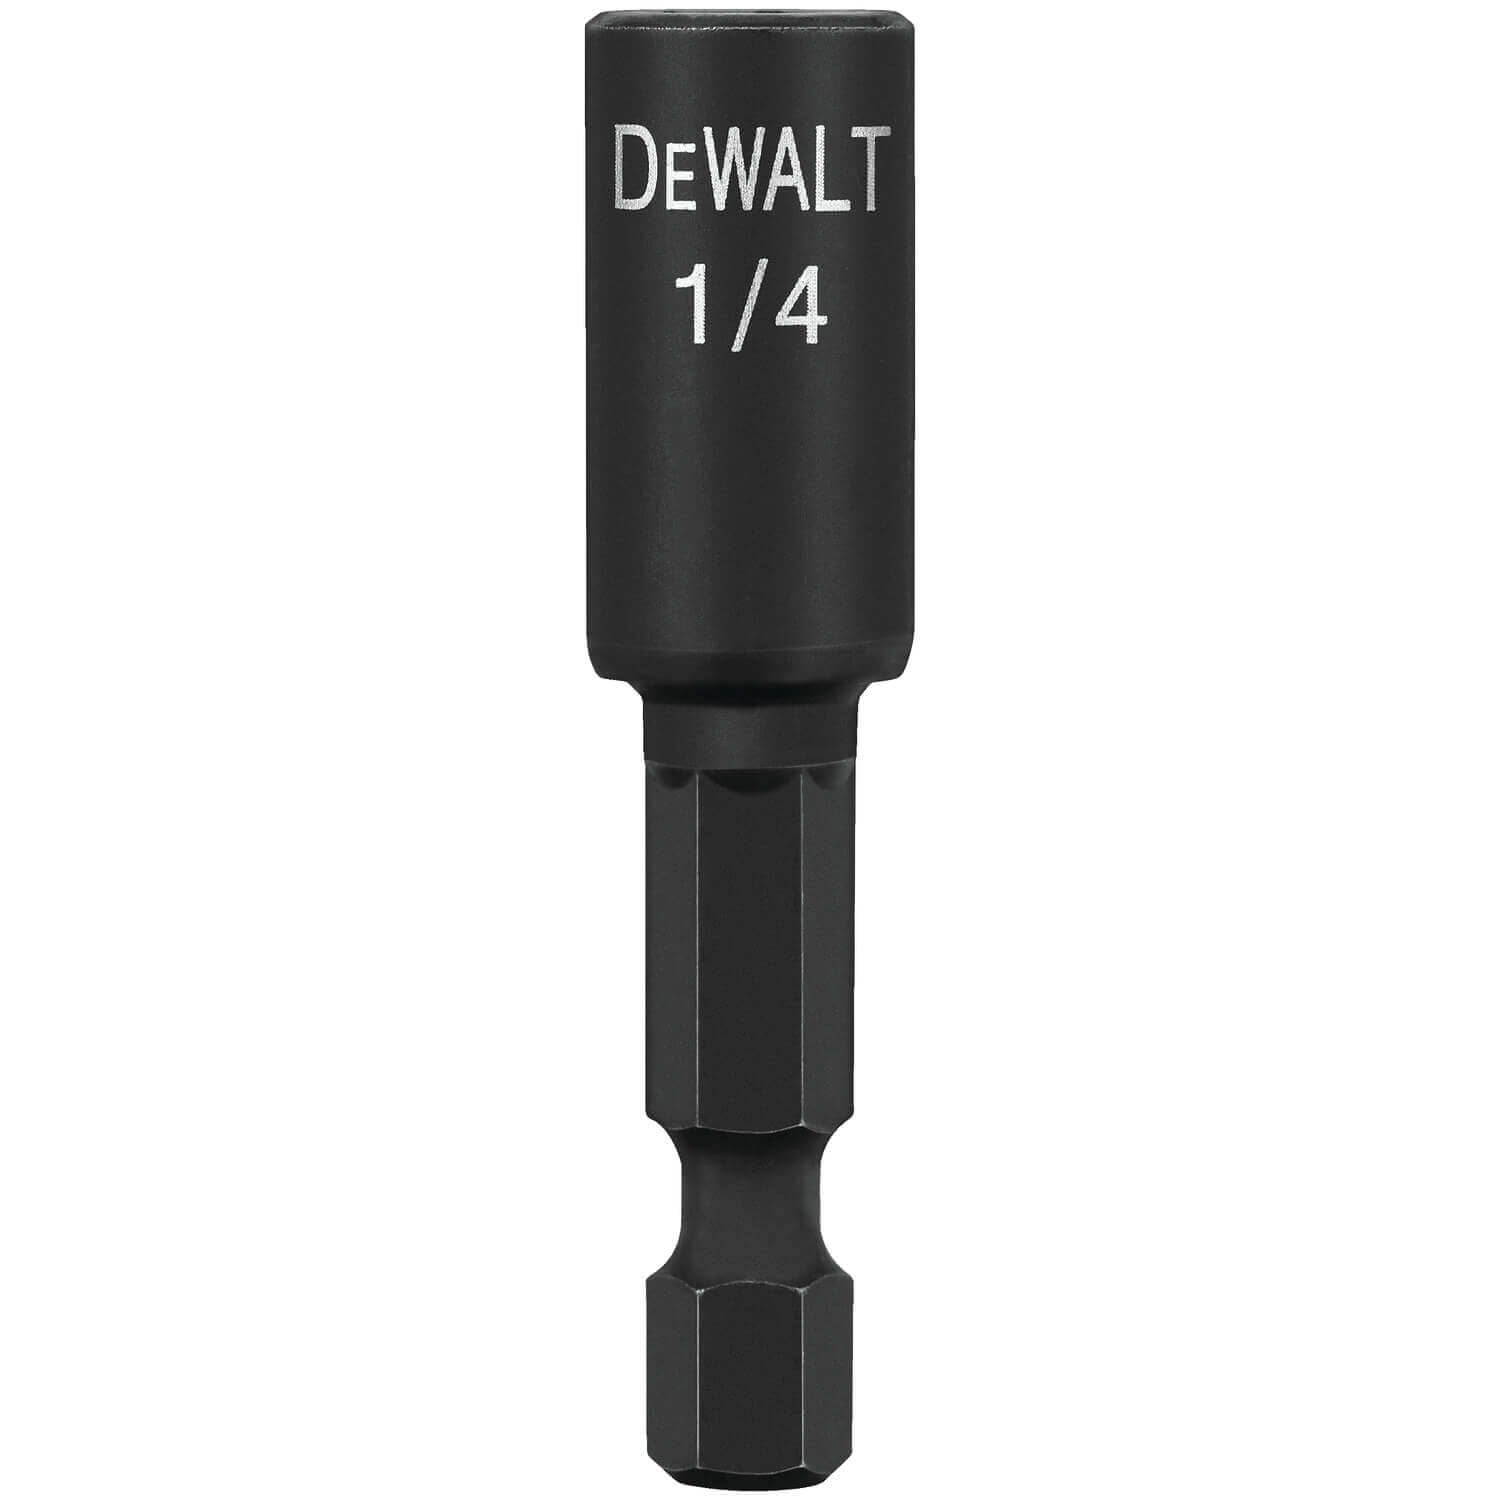 DEWALT DW2218IR - 1/4 Inch x 1 7/8 inch IMPACT READY MAGNETIC NUT DRIVER - wise-line-tools